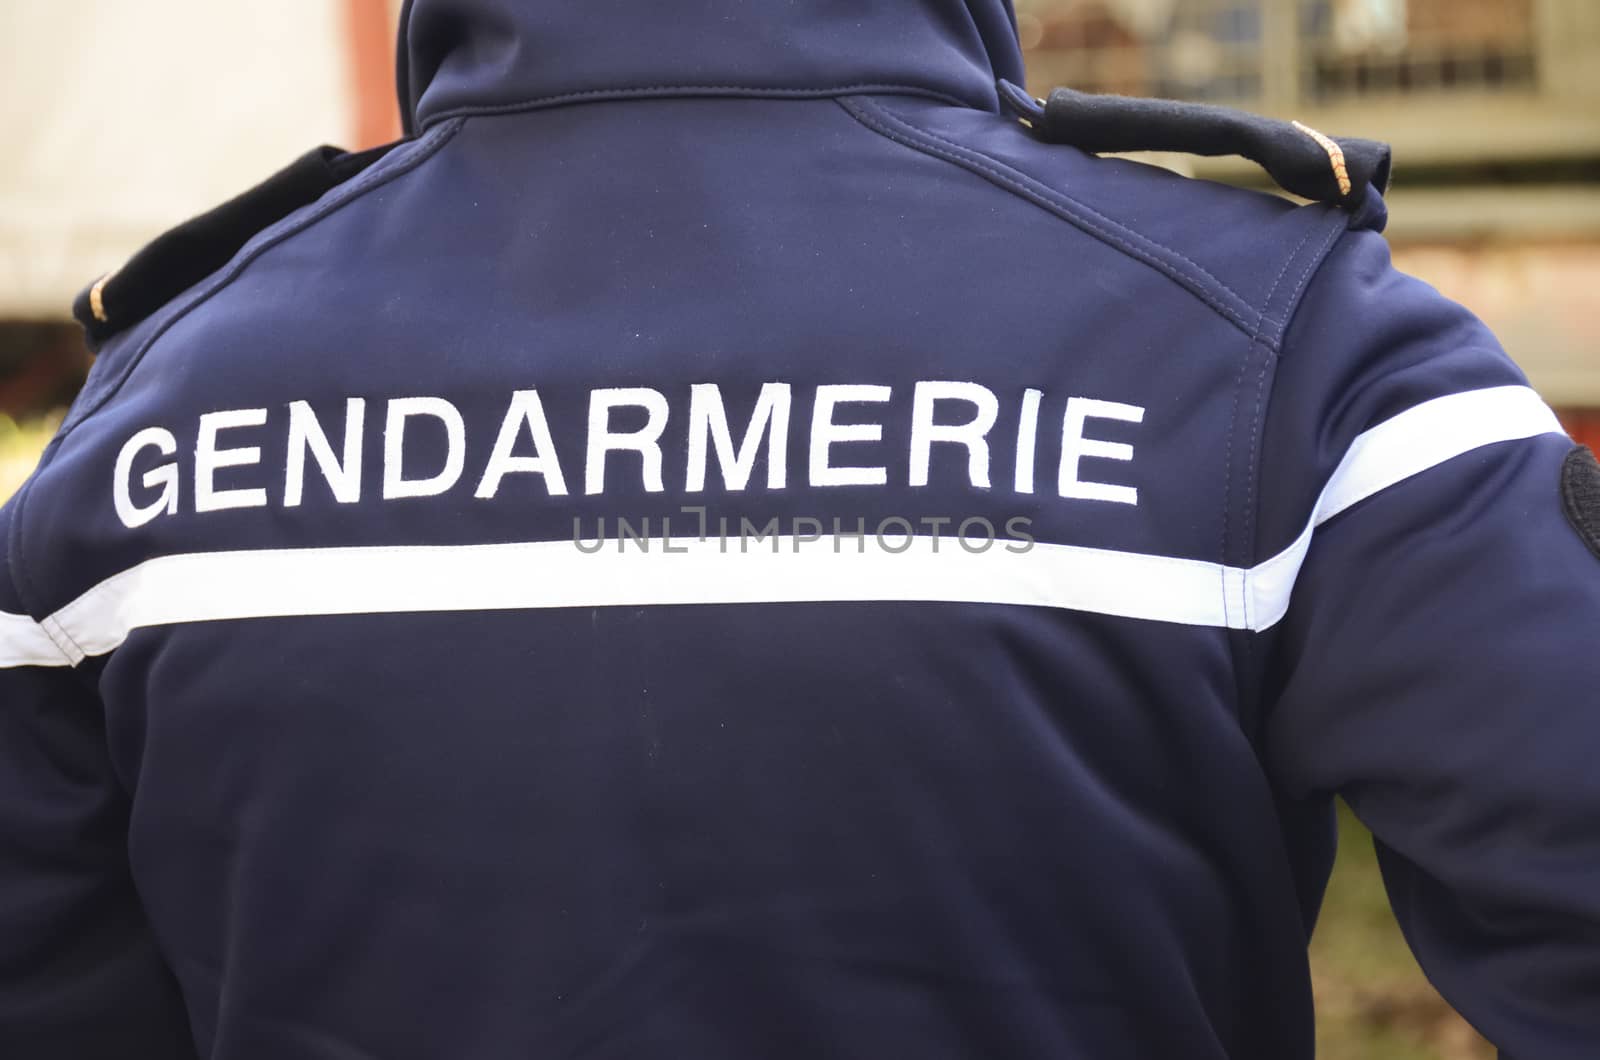 gendarme, french policeman uniform